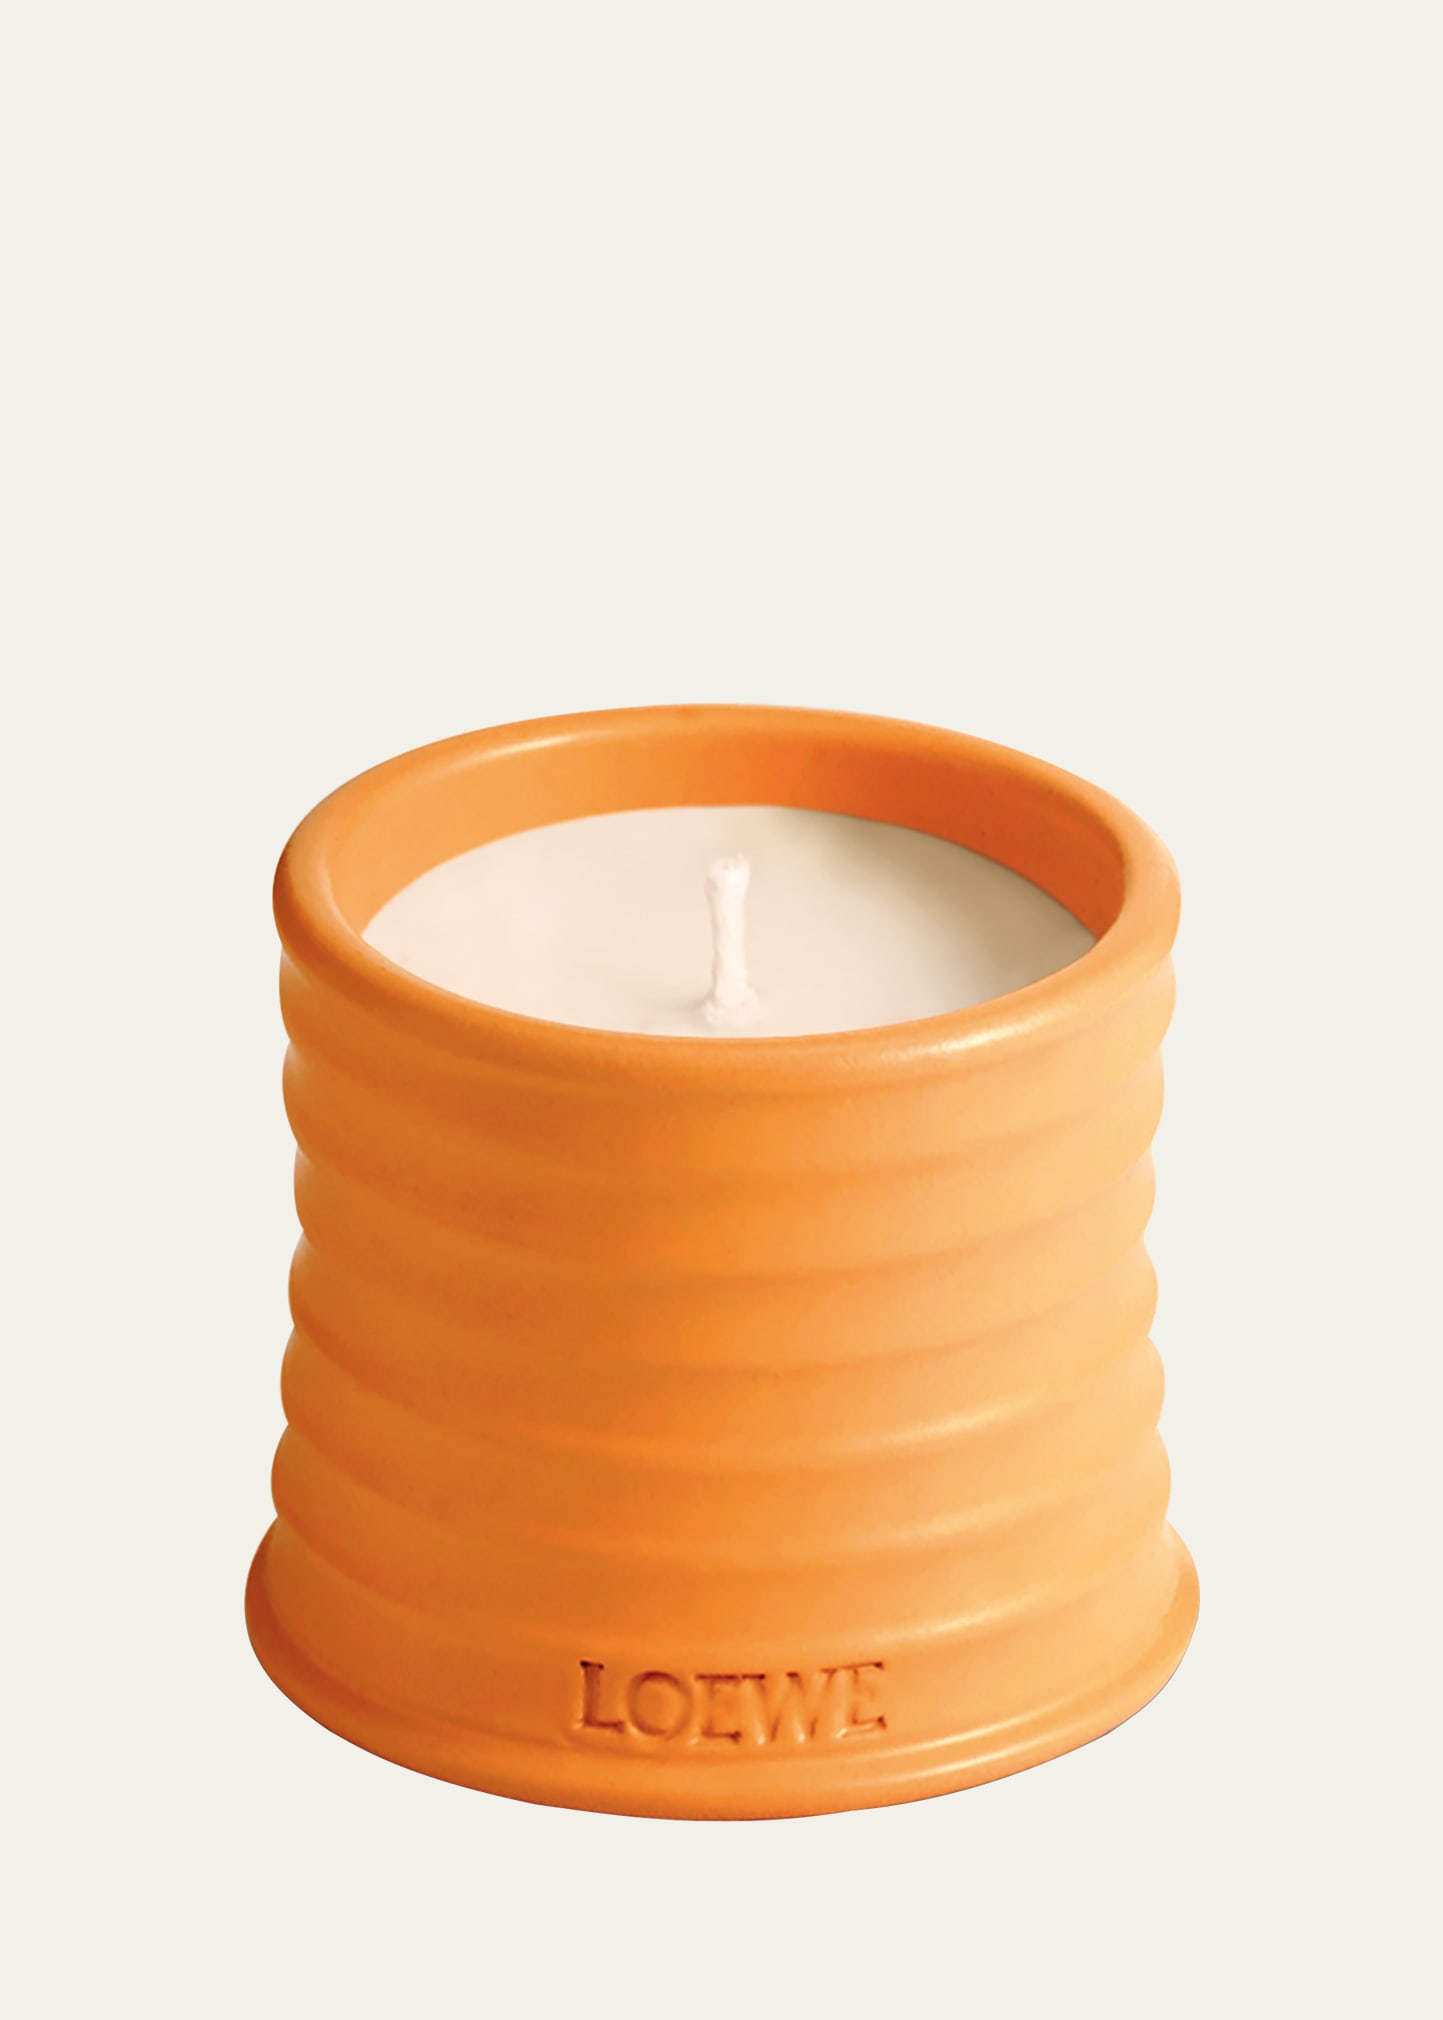 Loewe Orange Blossom Candle, 5.8 Oz.